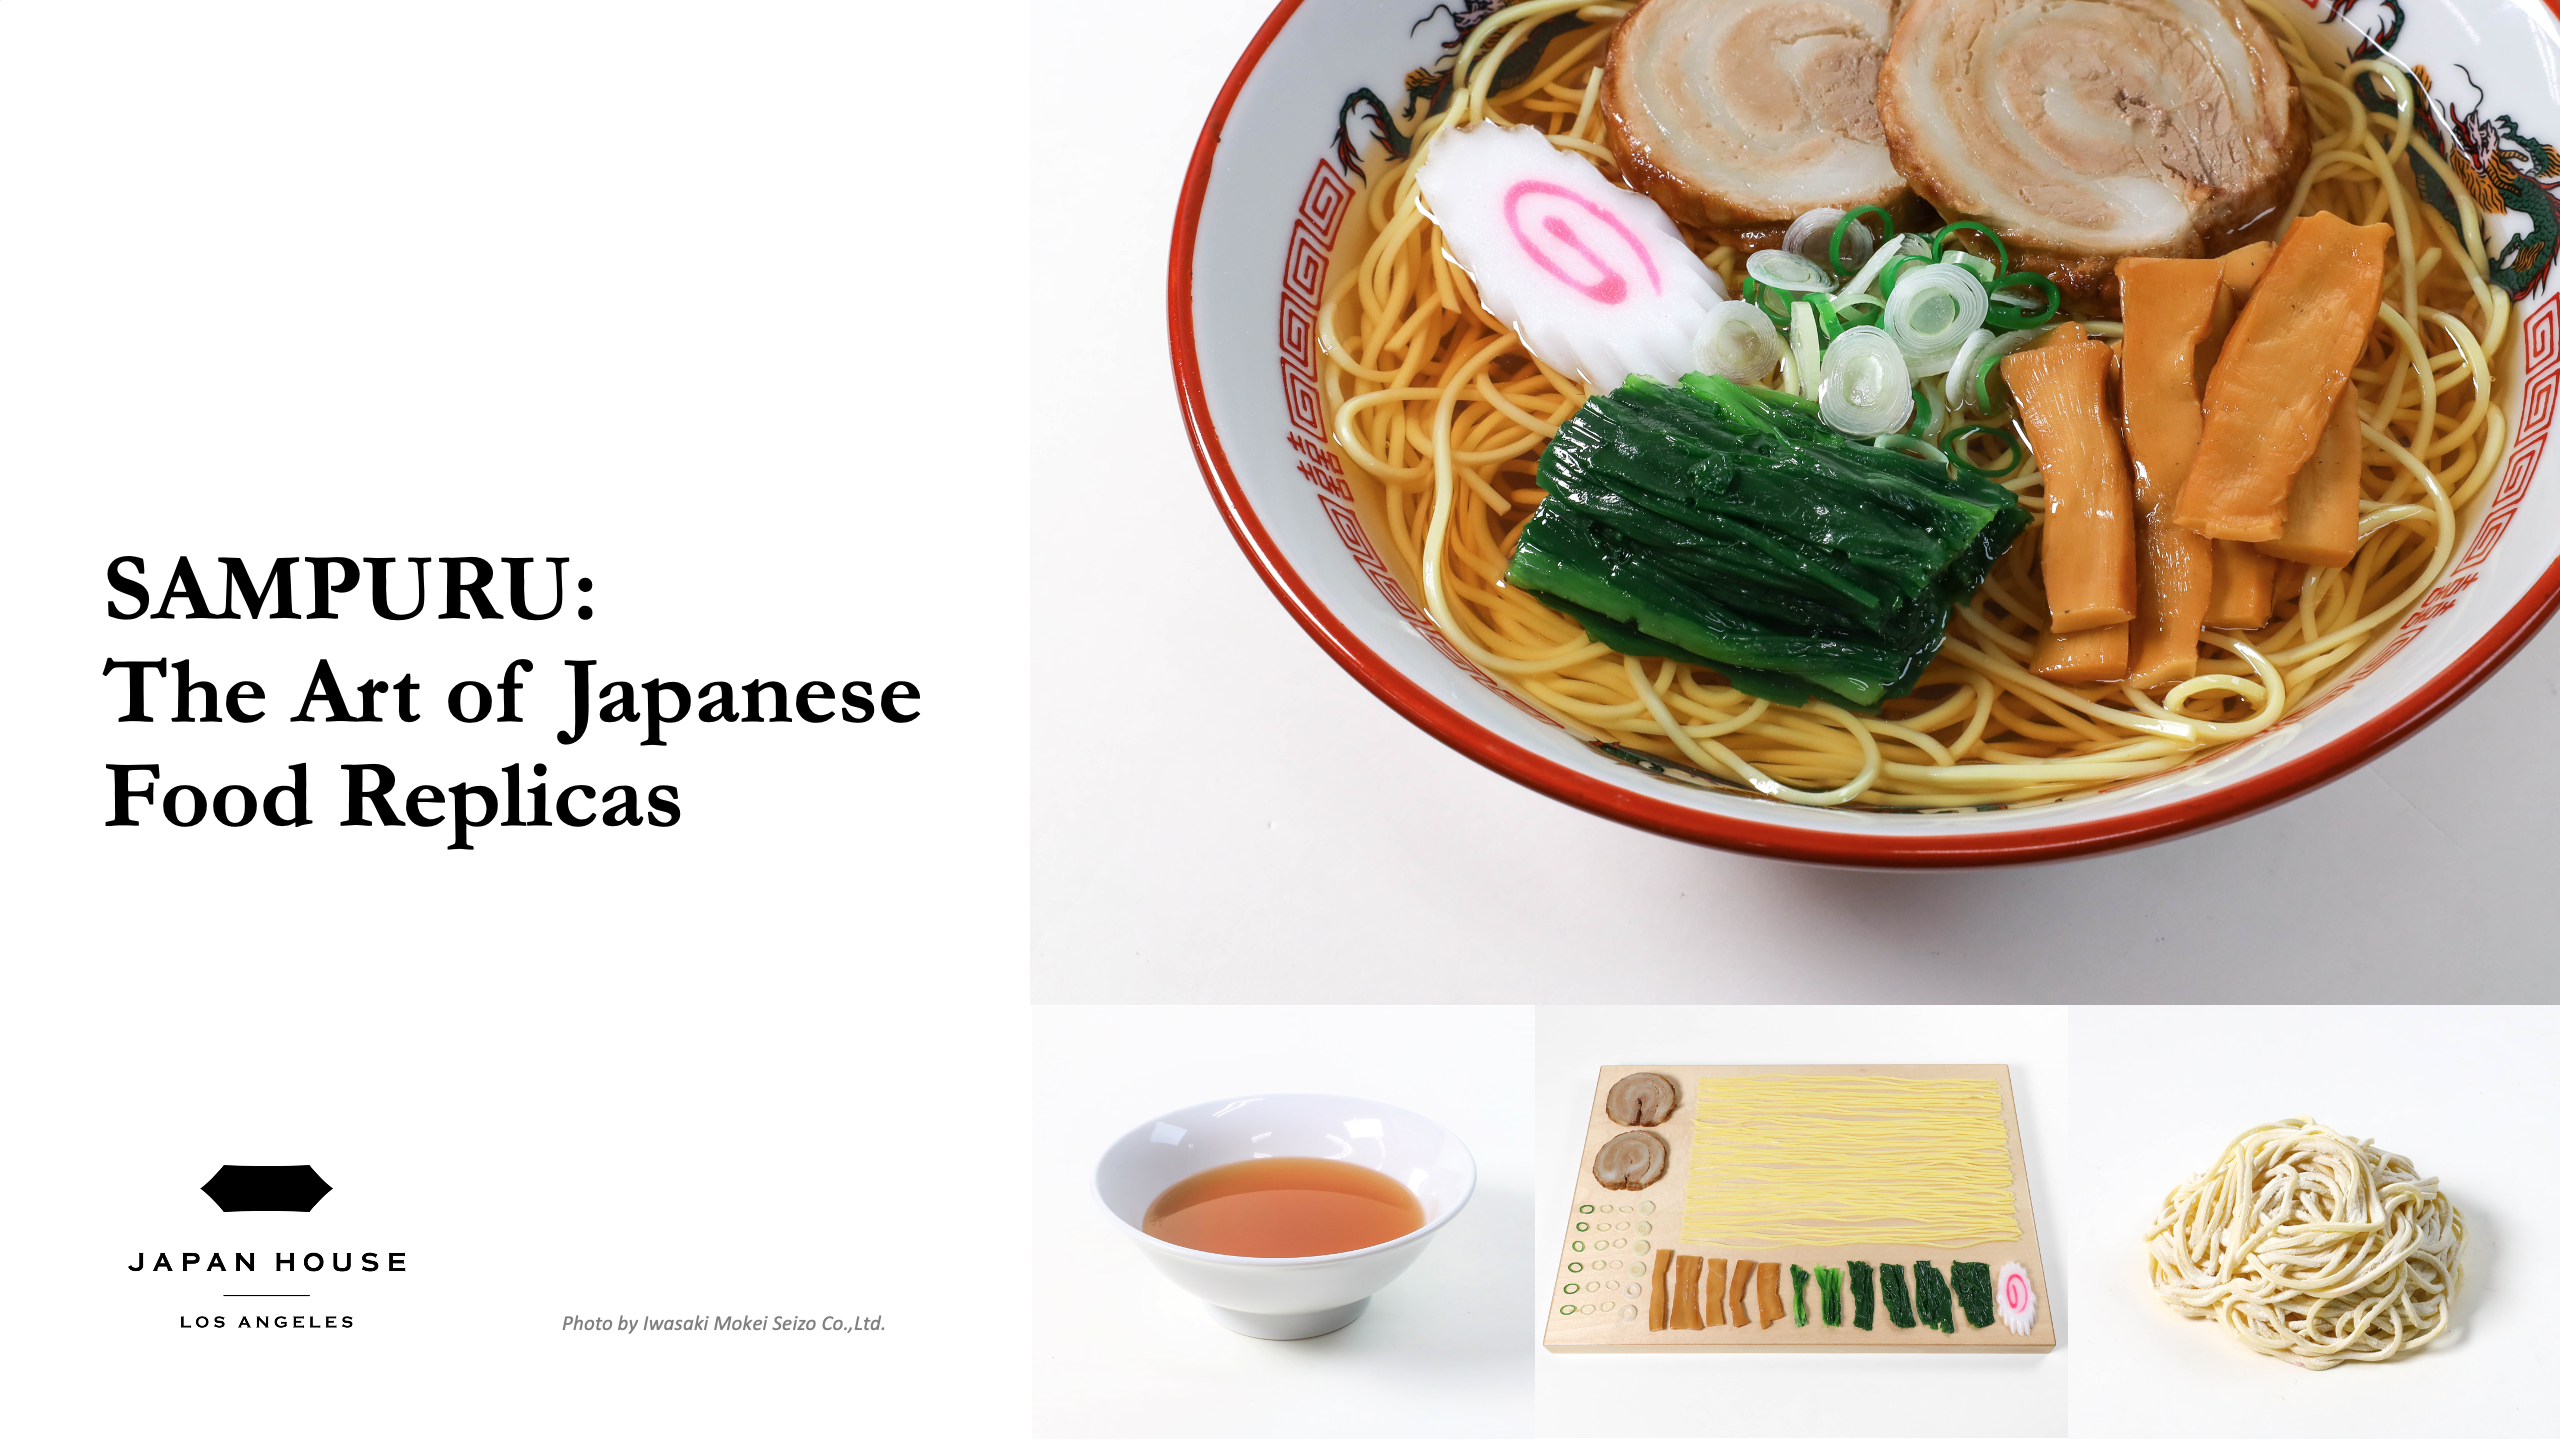 Sampuru: The Art of Japanese Food Replicas. Japan House Los Angeles. Photo by Iwasaki Mokei Seizo Co., Ltd.